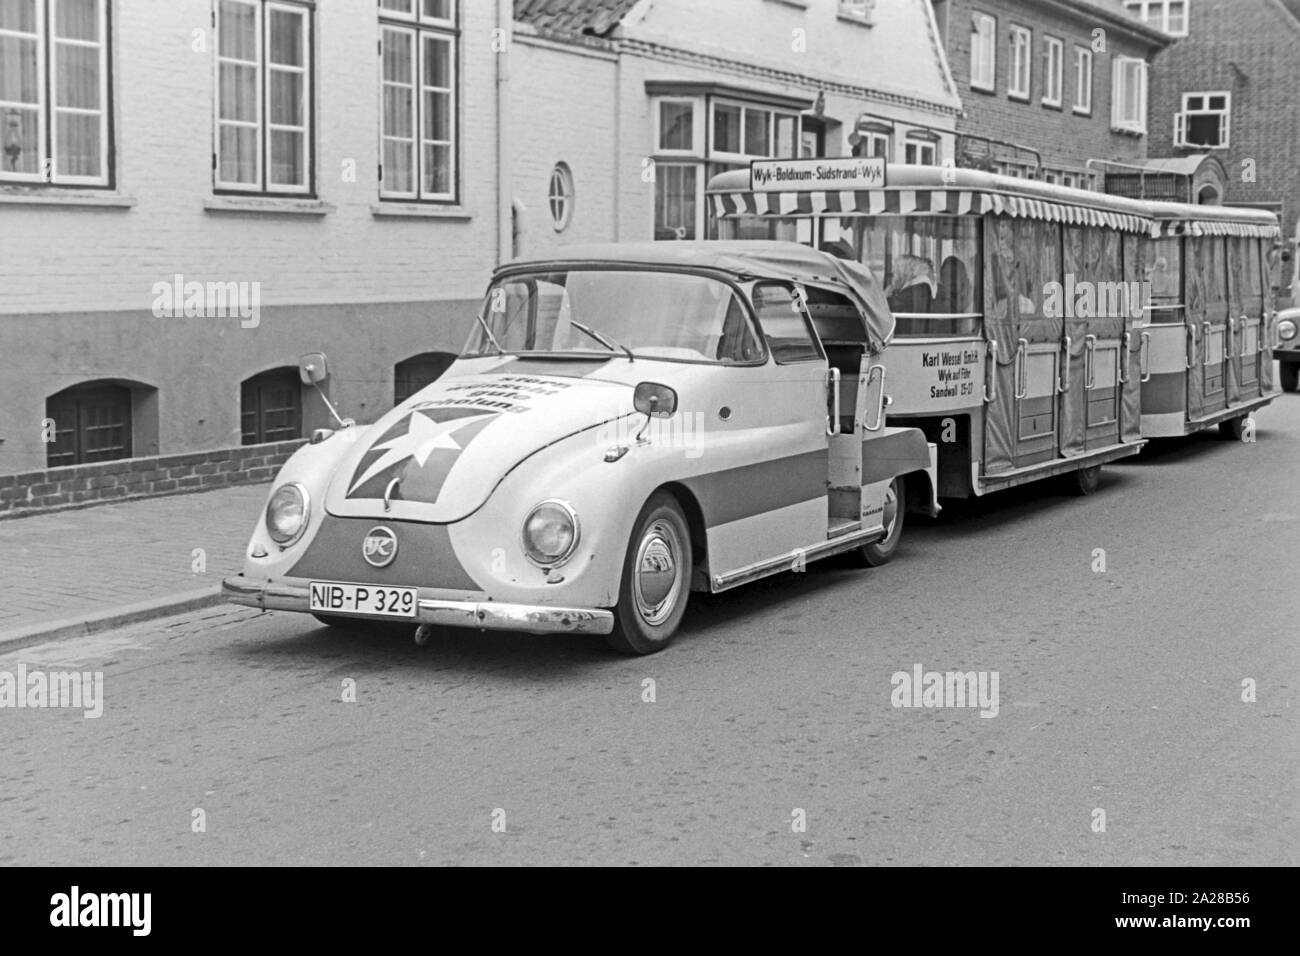 Kässbohrer mit Zugmaschine Transport Bimmelbahn auf der Insel Föhr, Deutschland 1960 er Jahre. Kaessbohrer transports En train sur Foehr island, l'Allemagne des années 1960. Banque D'Images